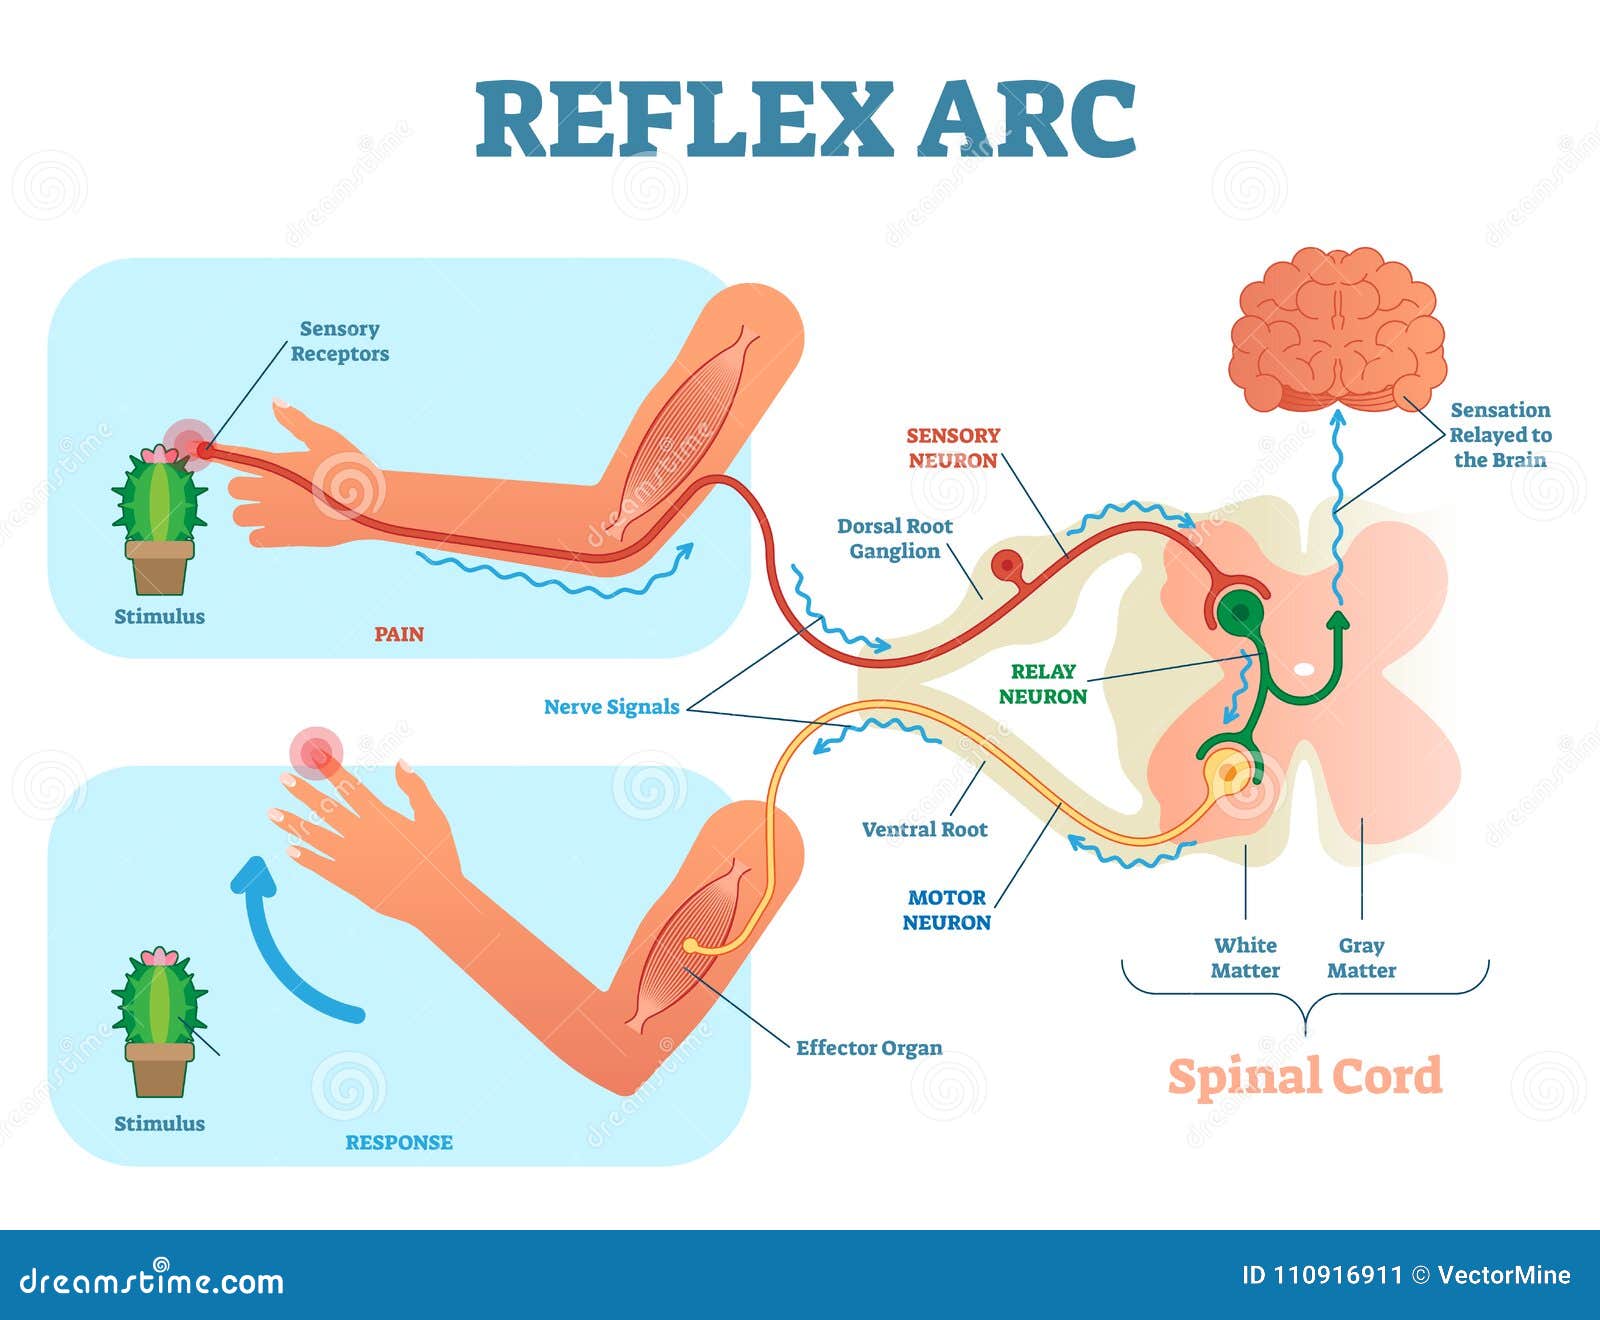 spinal reflex arc anatomical scheme,  , with stimulus, sensory neuron, motor neuron and muscle tissue.